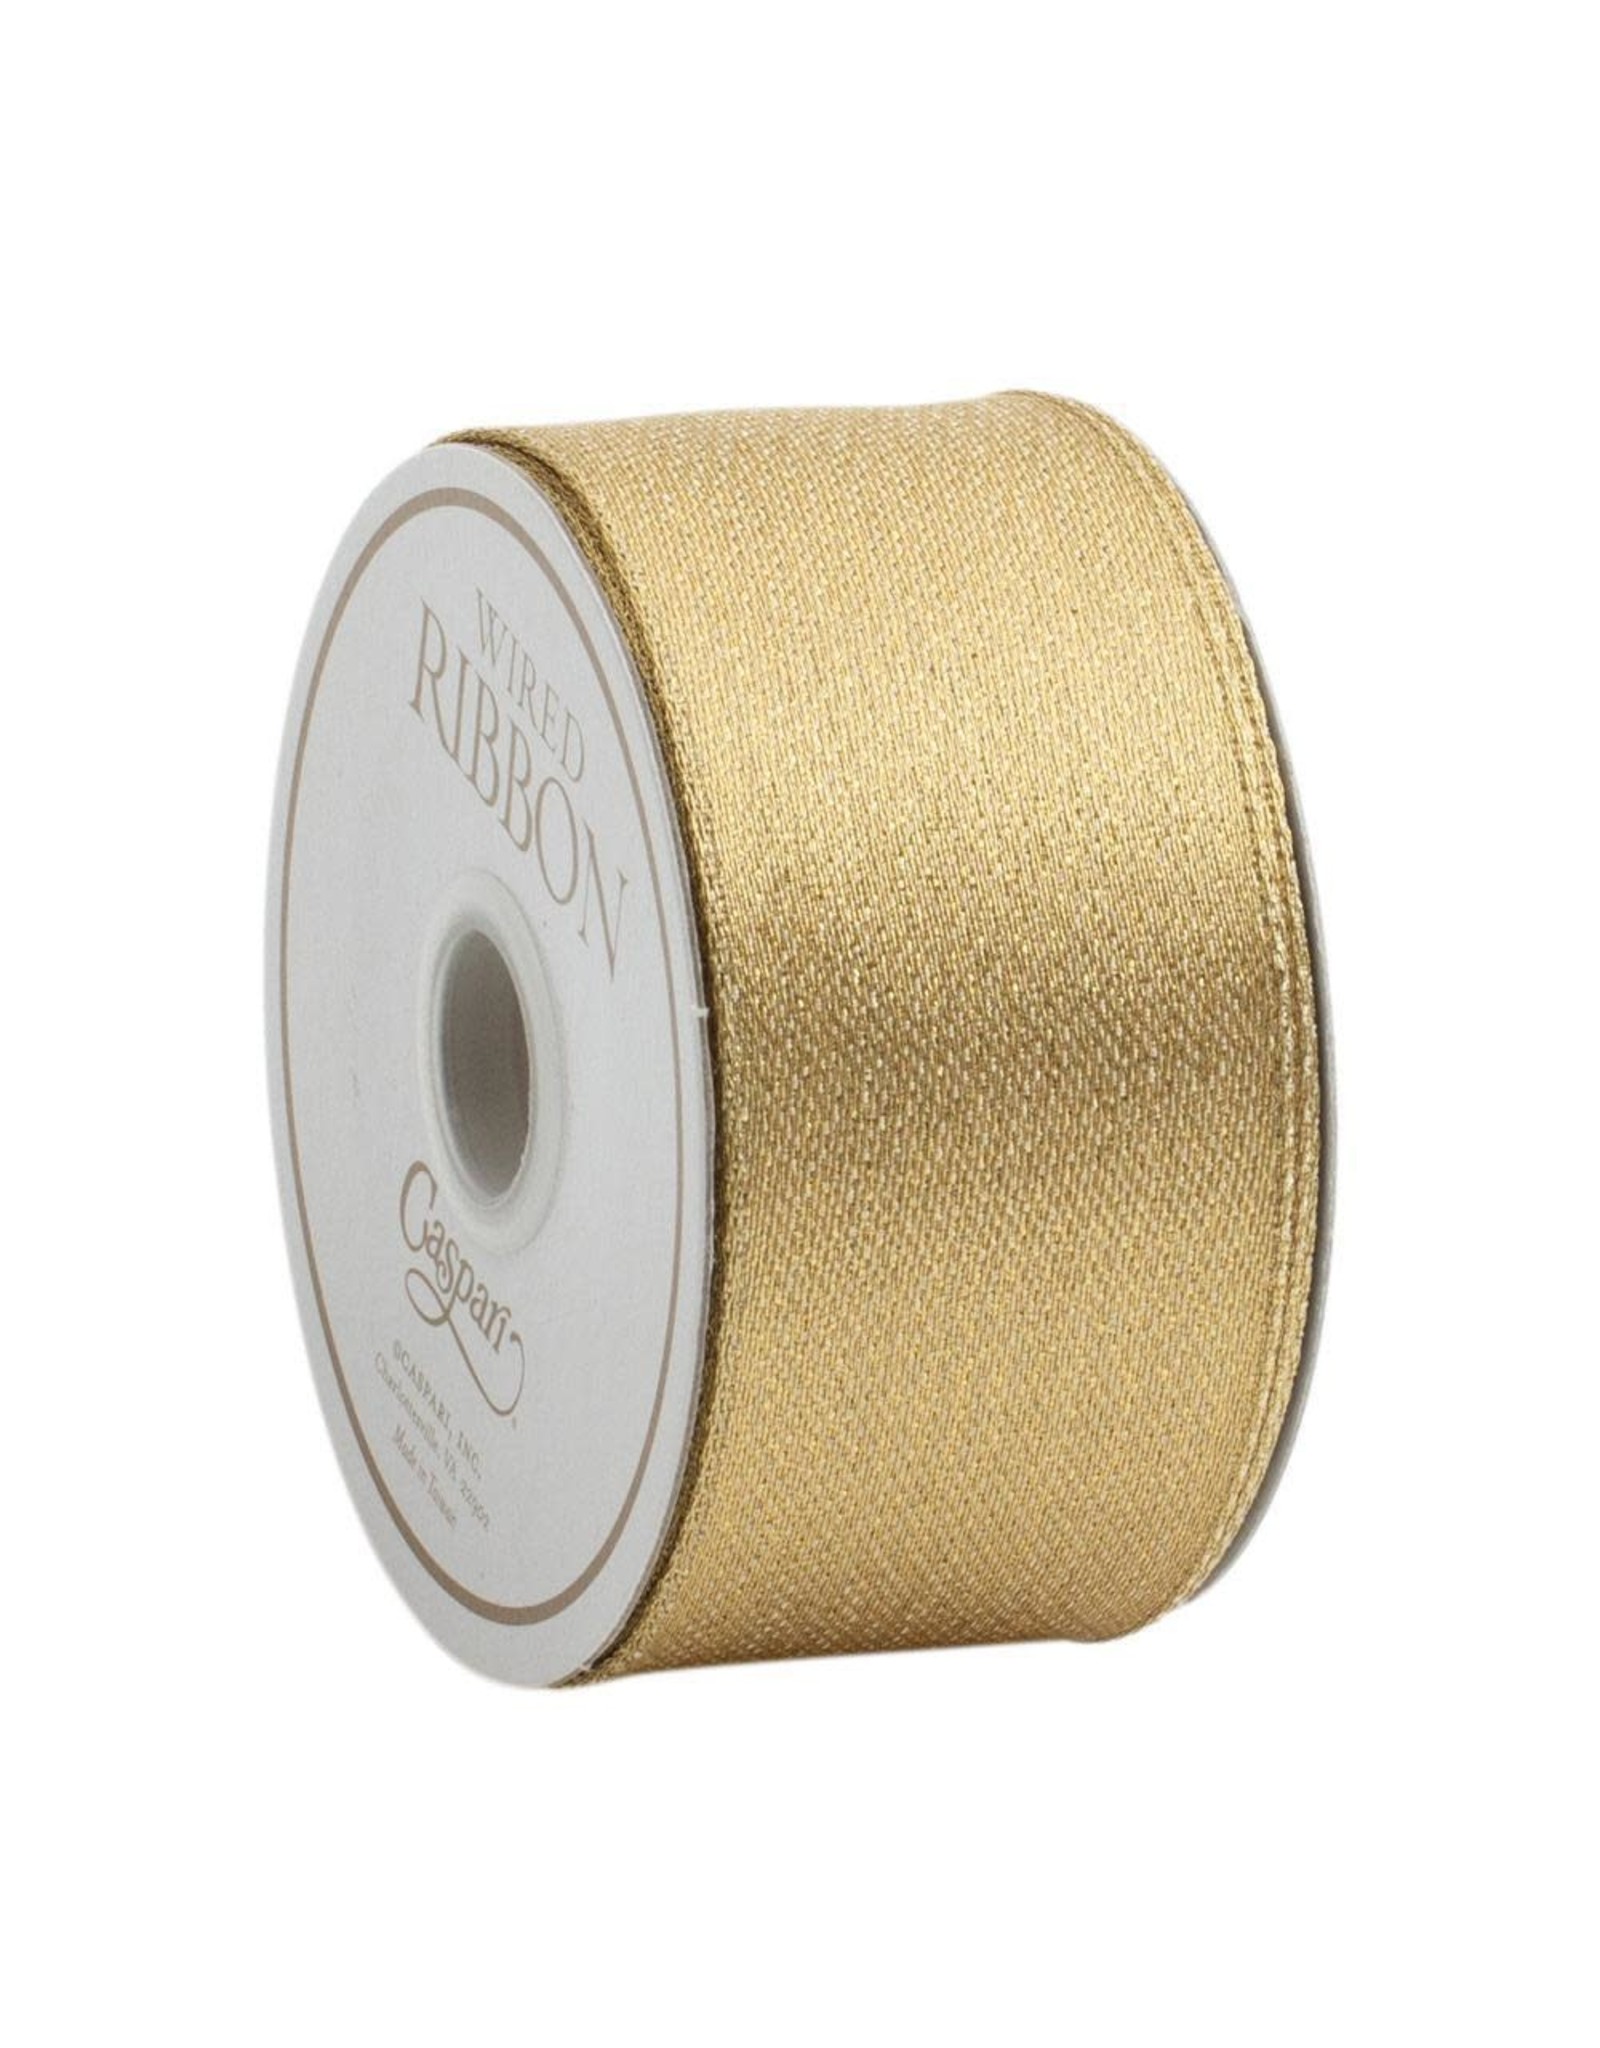 Caspari Ribbons Metallic Gold Wired Ribbon 1.5 Inch Wide x 8 Yards